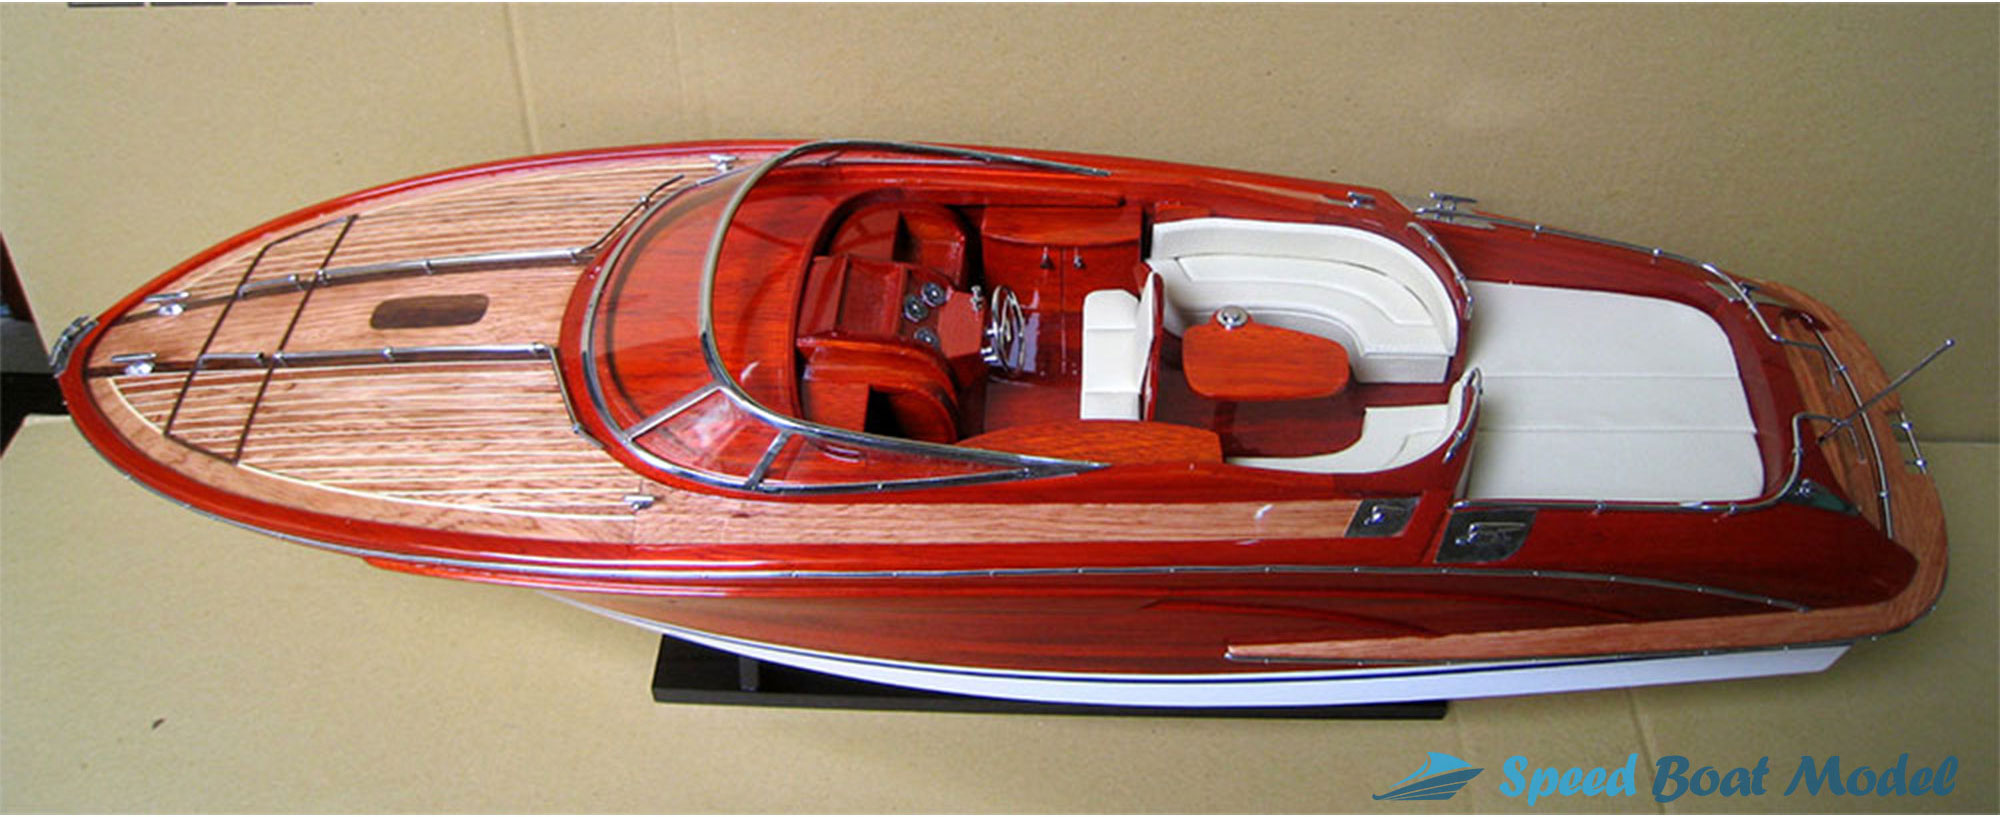 Riva Rama 44 Classic Speed Boat Model 25.6"